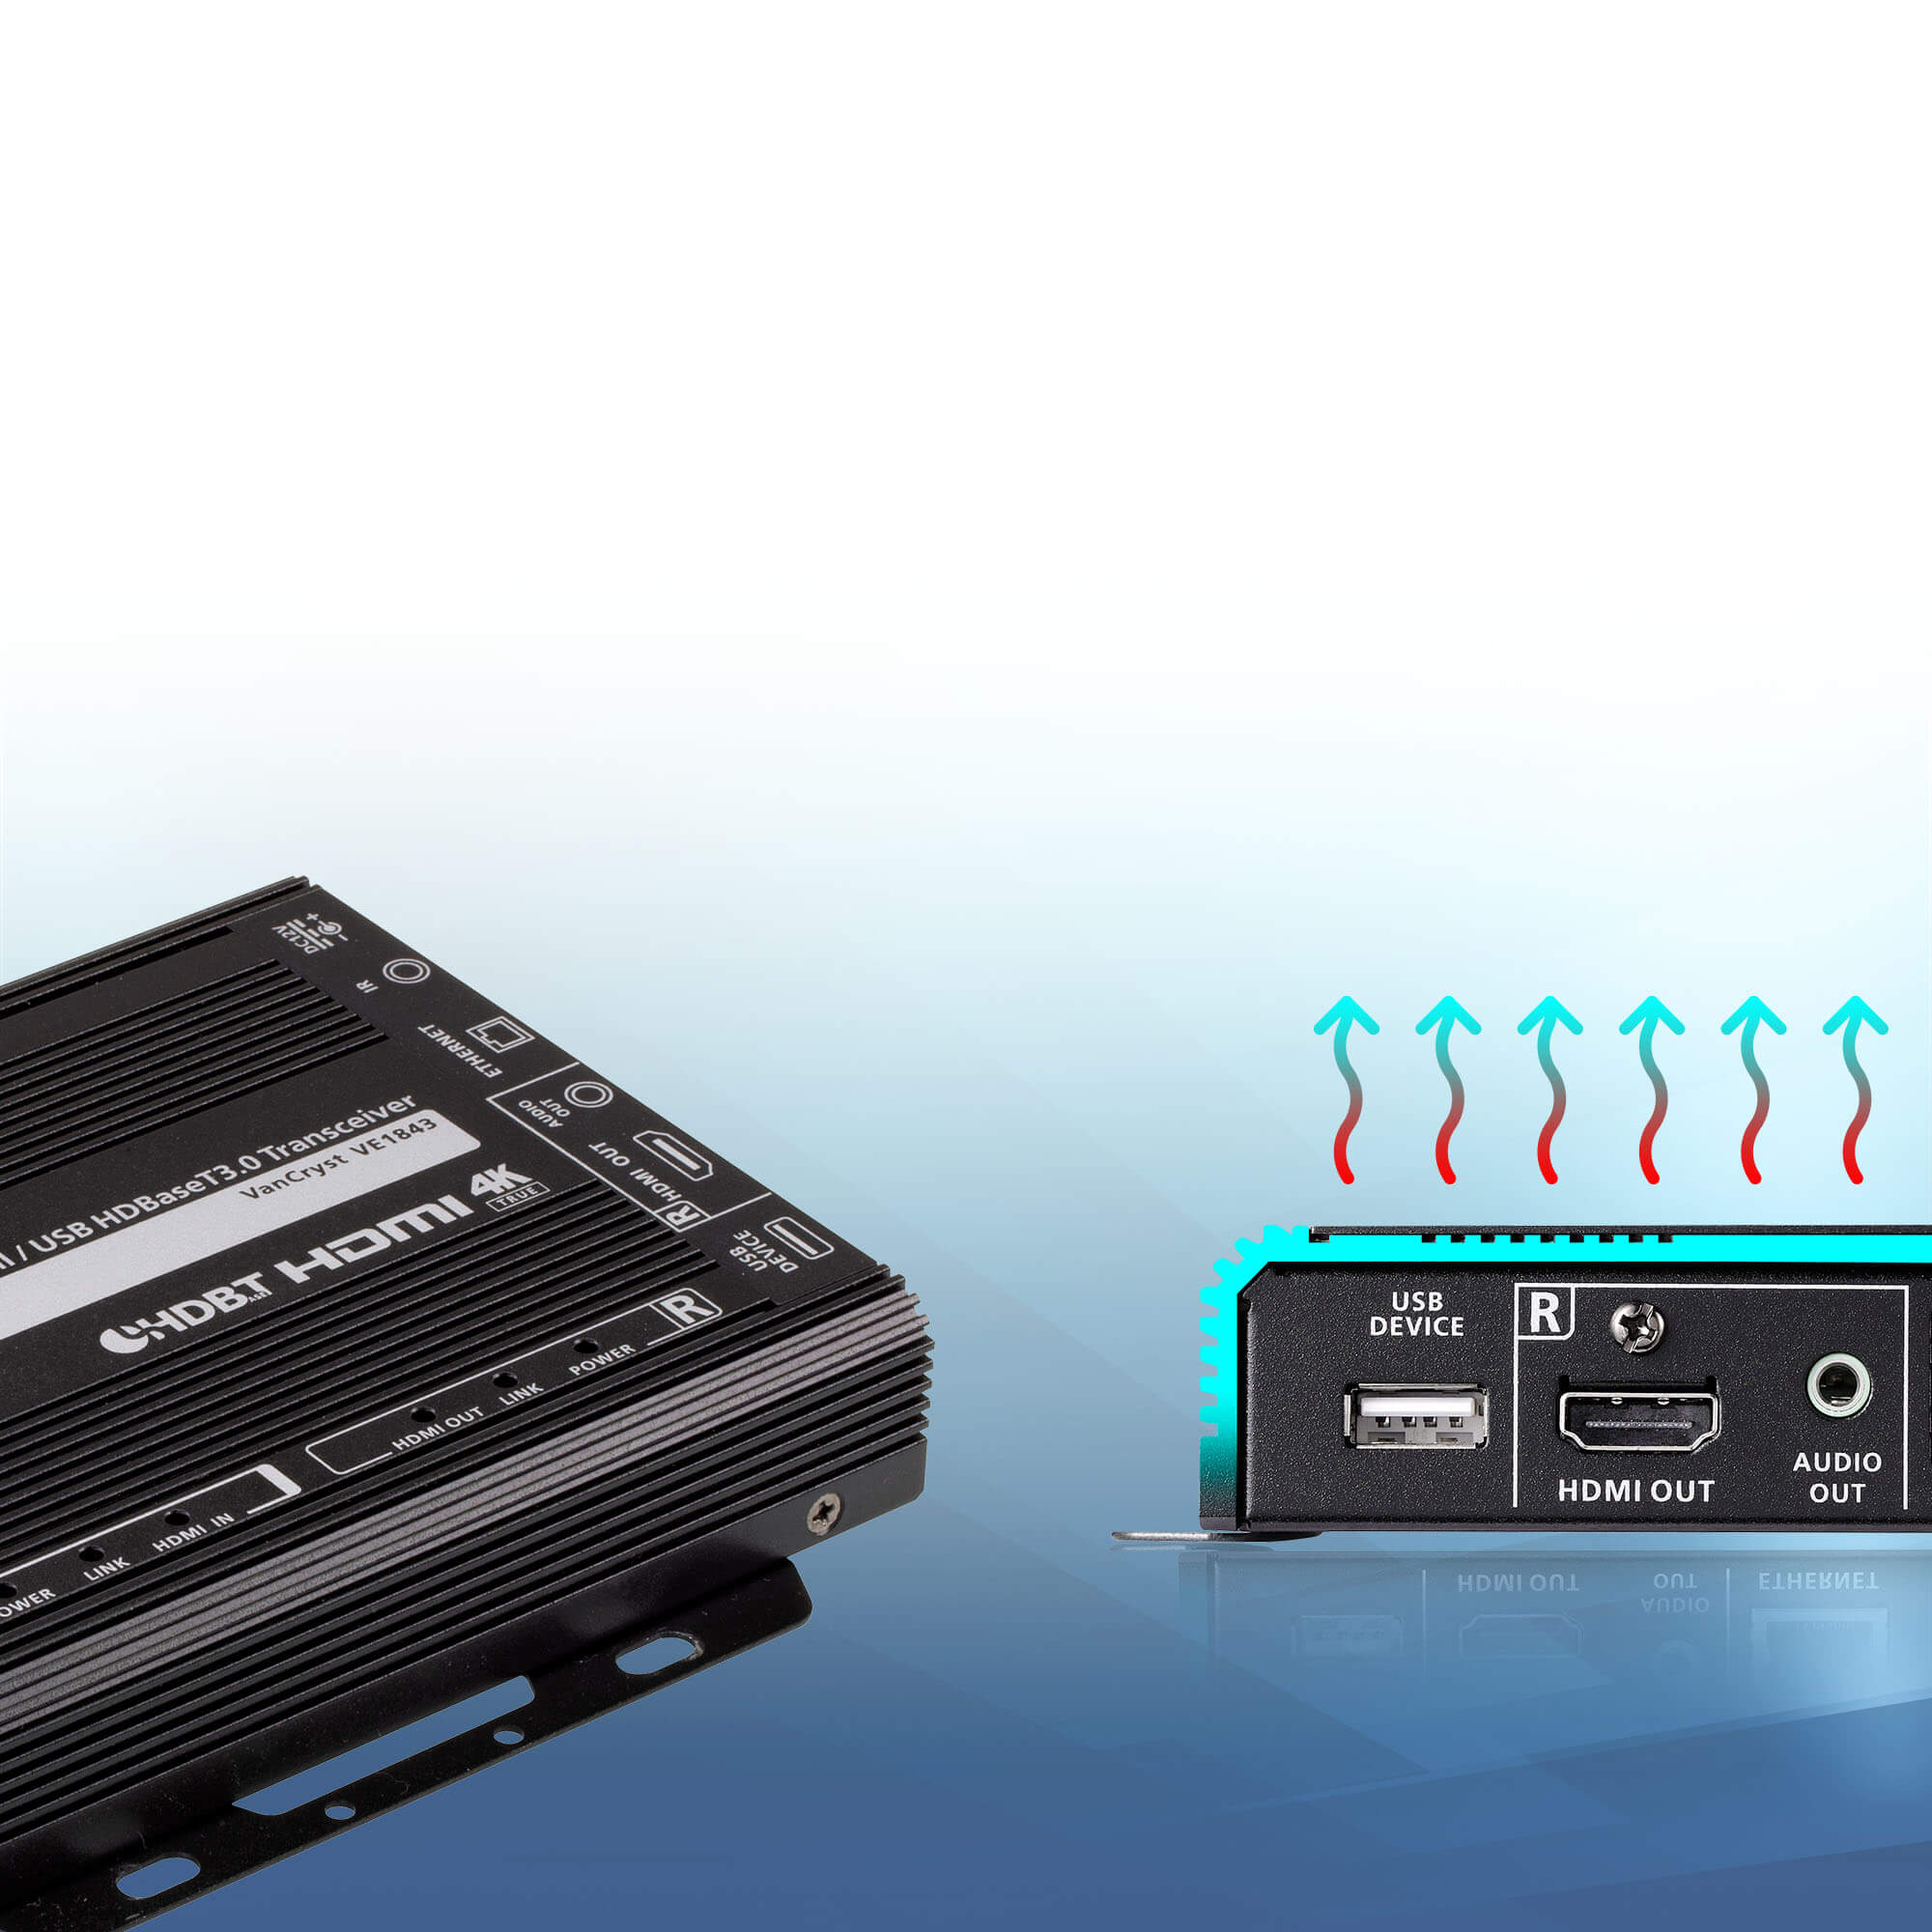 Aten True 4K HDMI / USB HDBaseT 3.0 Transceiver -VE1843 (3 Year Manufacture Local Warranty In Singapore)